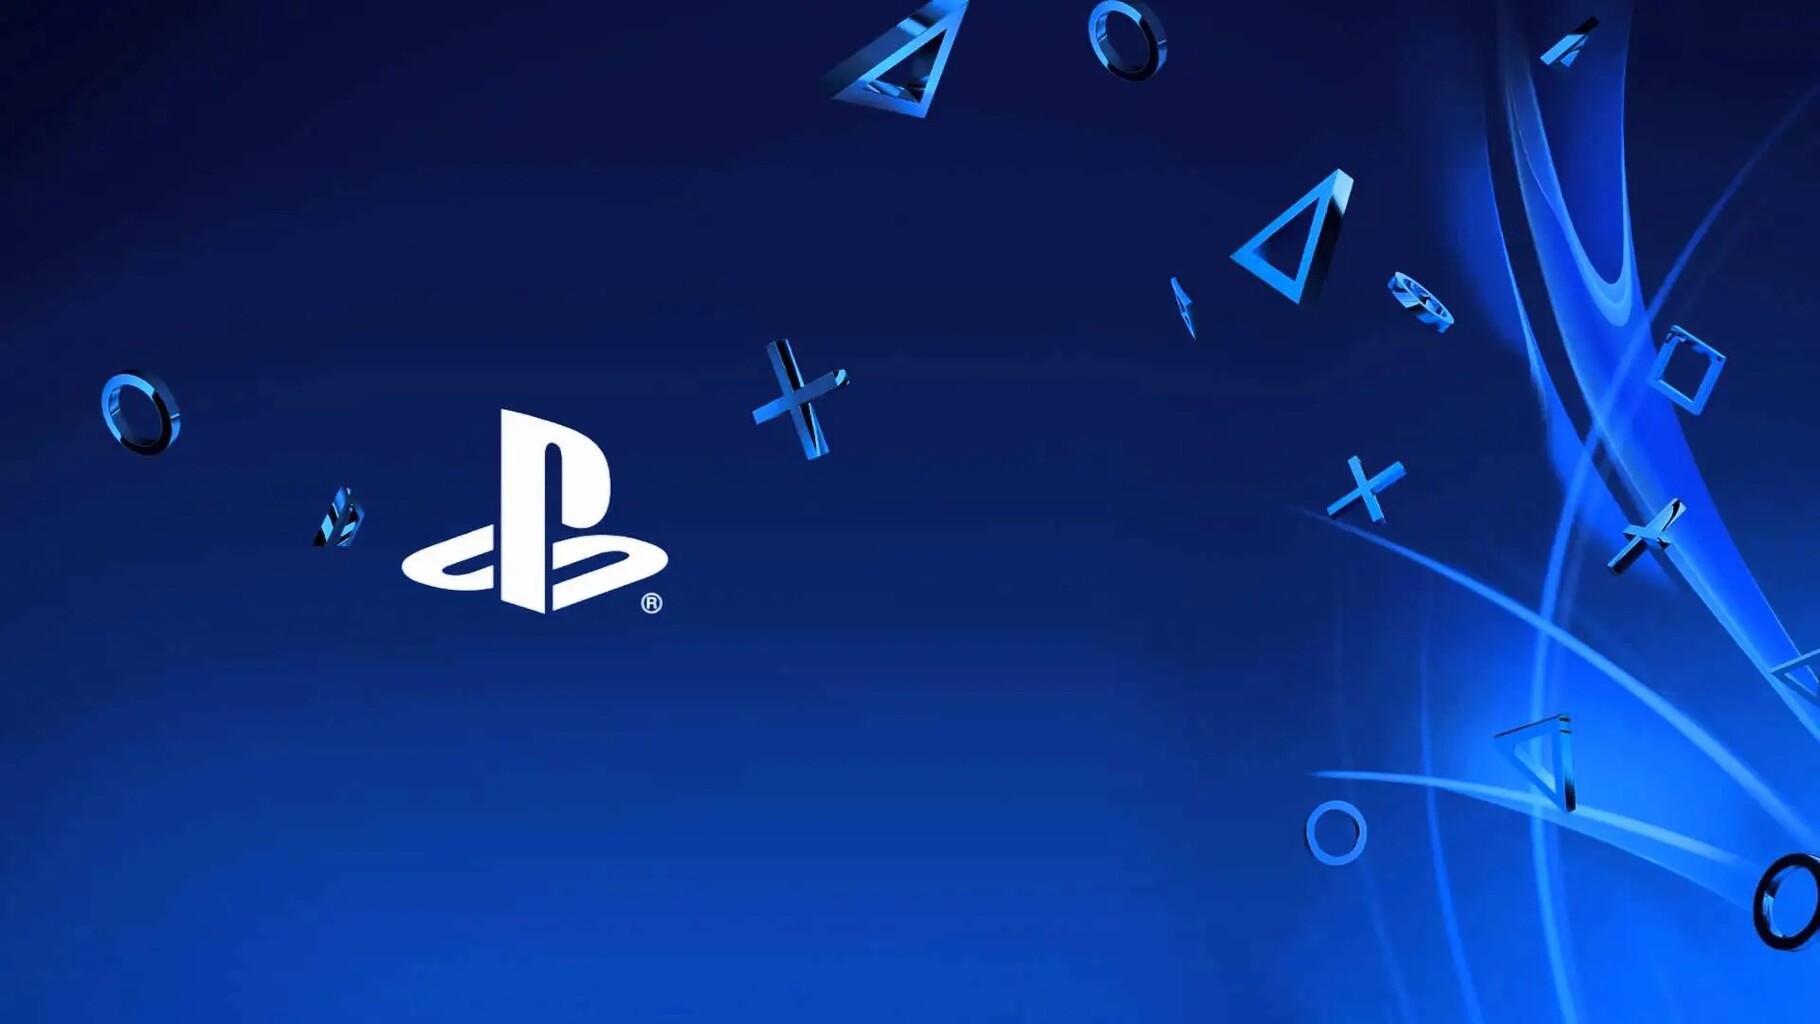 😮 U Sony hočuť zbiľšyty prybutky PlayStation za rahunok muľtyplatformy dlja ekskljuzyviv